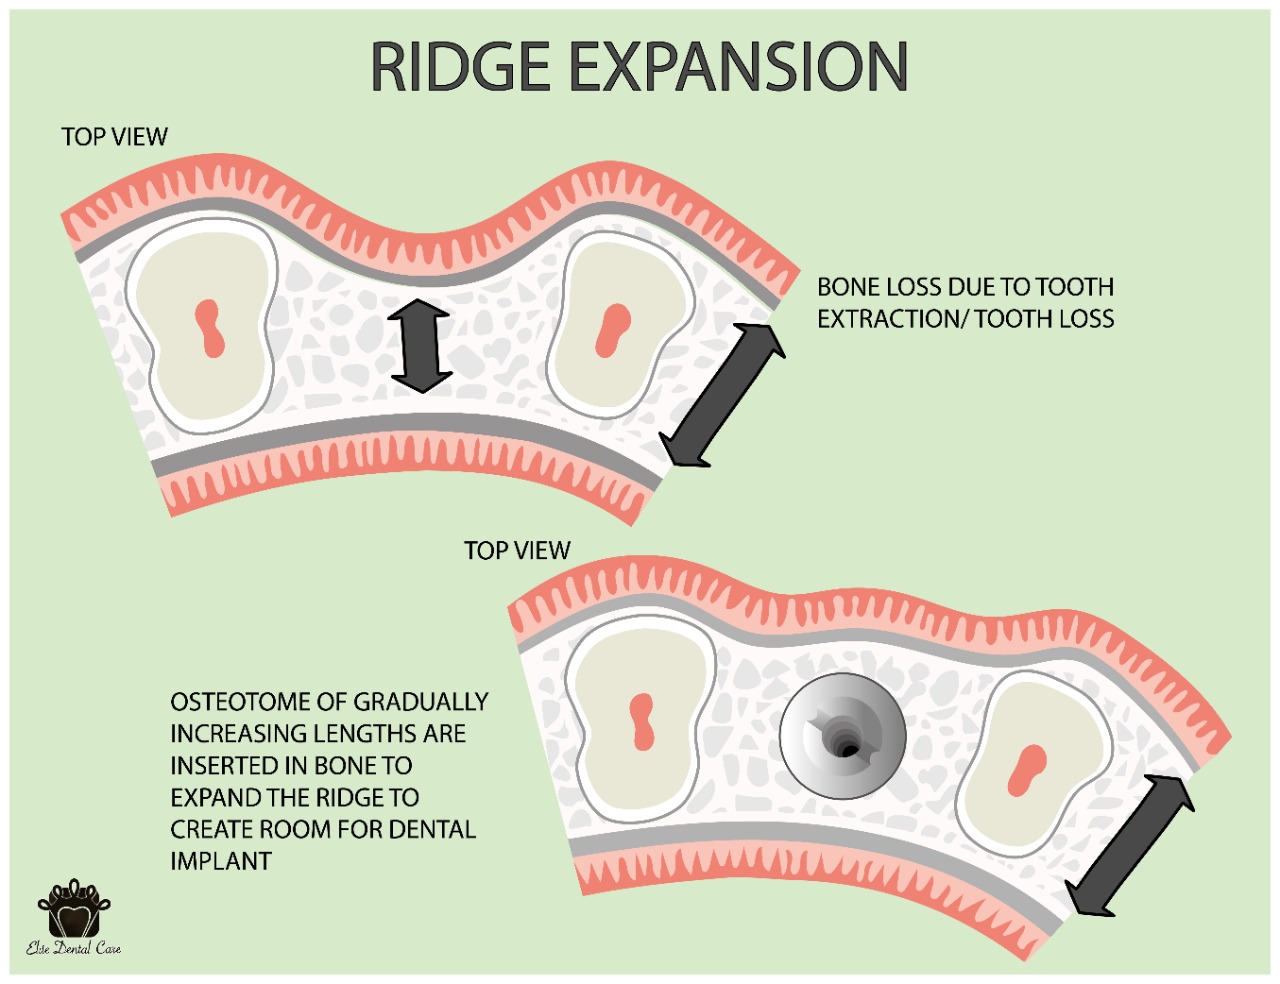 Ridge Expansion and Technique